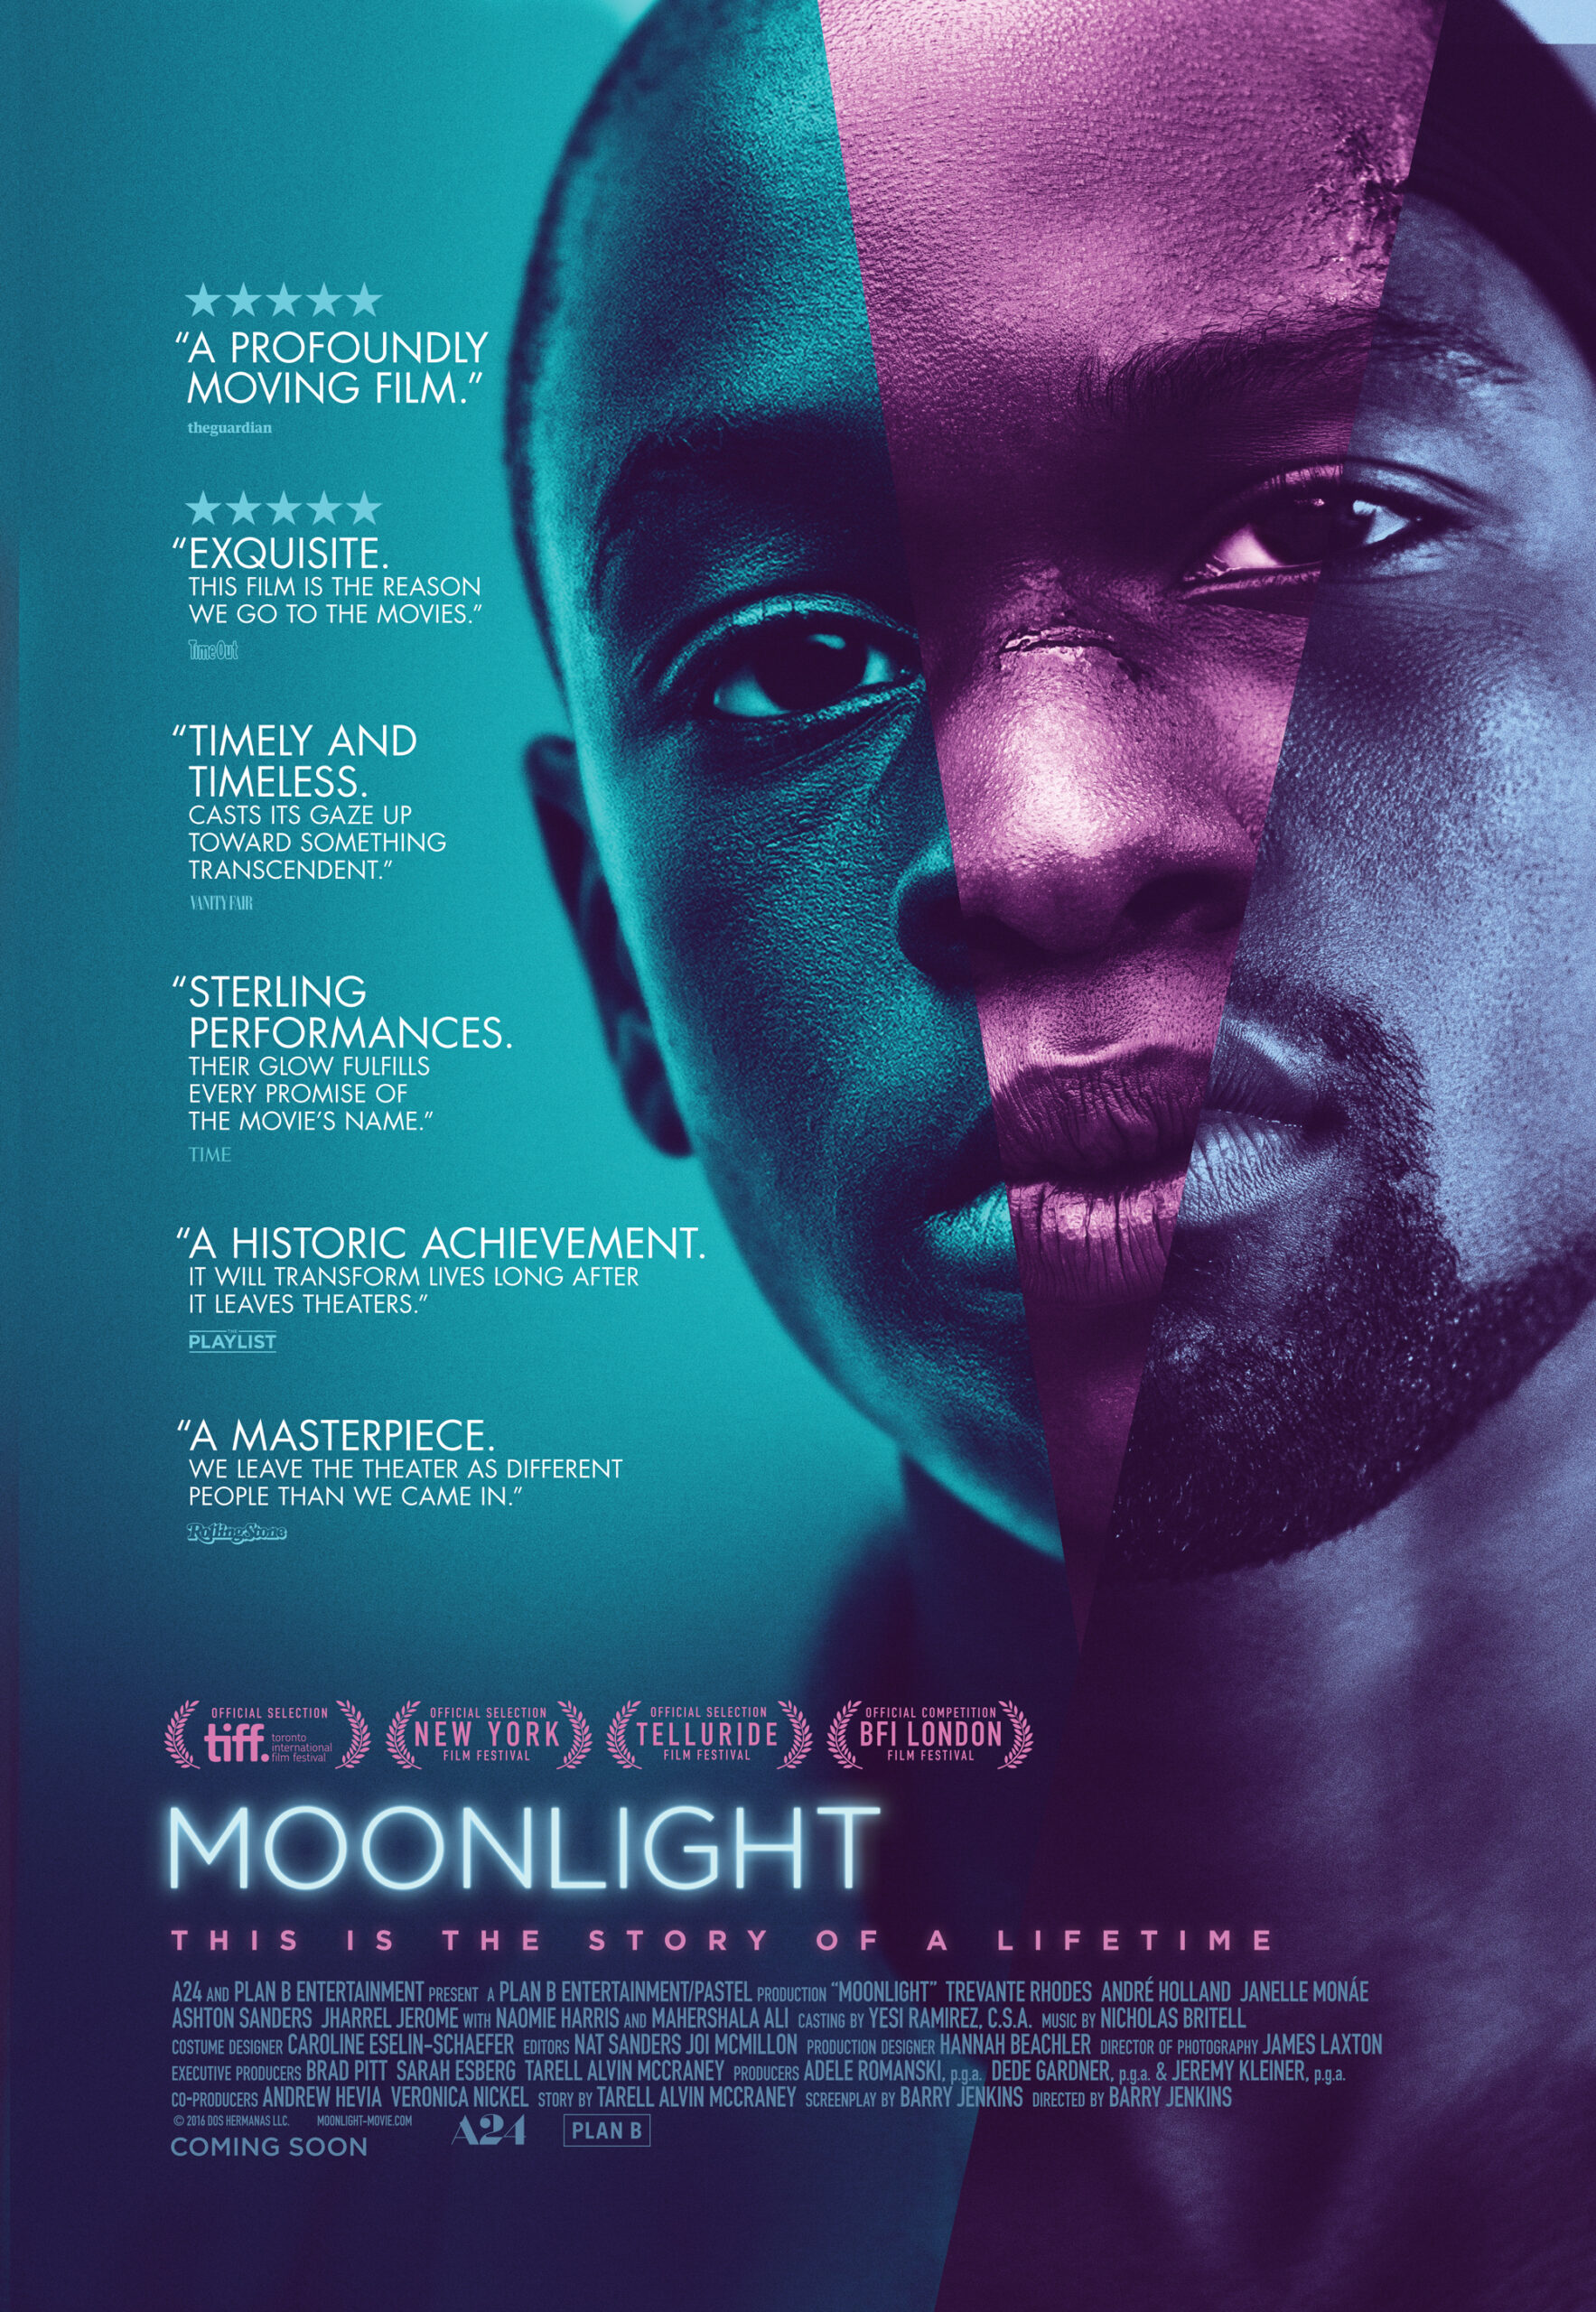 Oscar mistake should not outshine the tremendous achievement of ‘Moonlight’